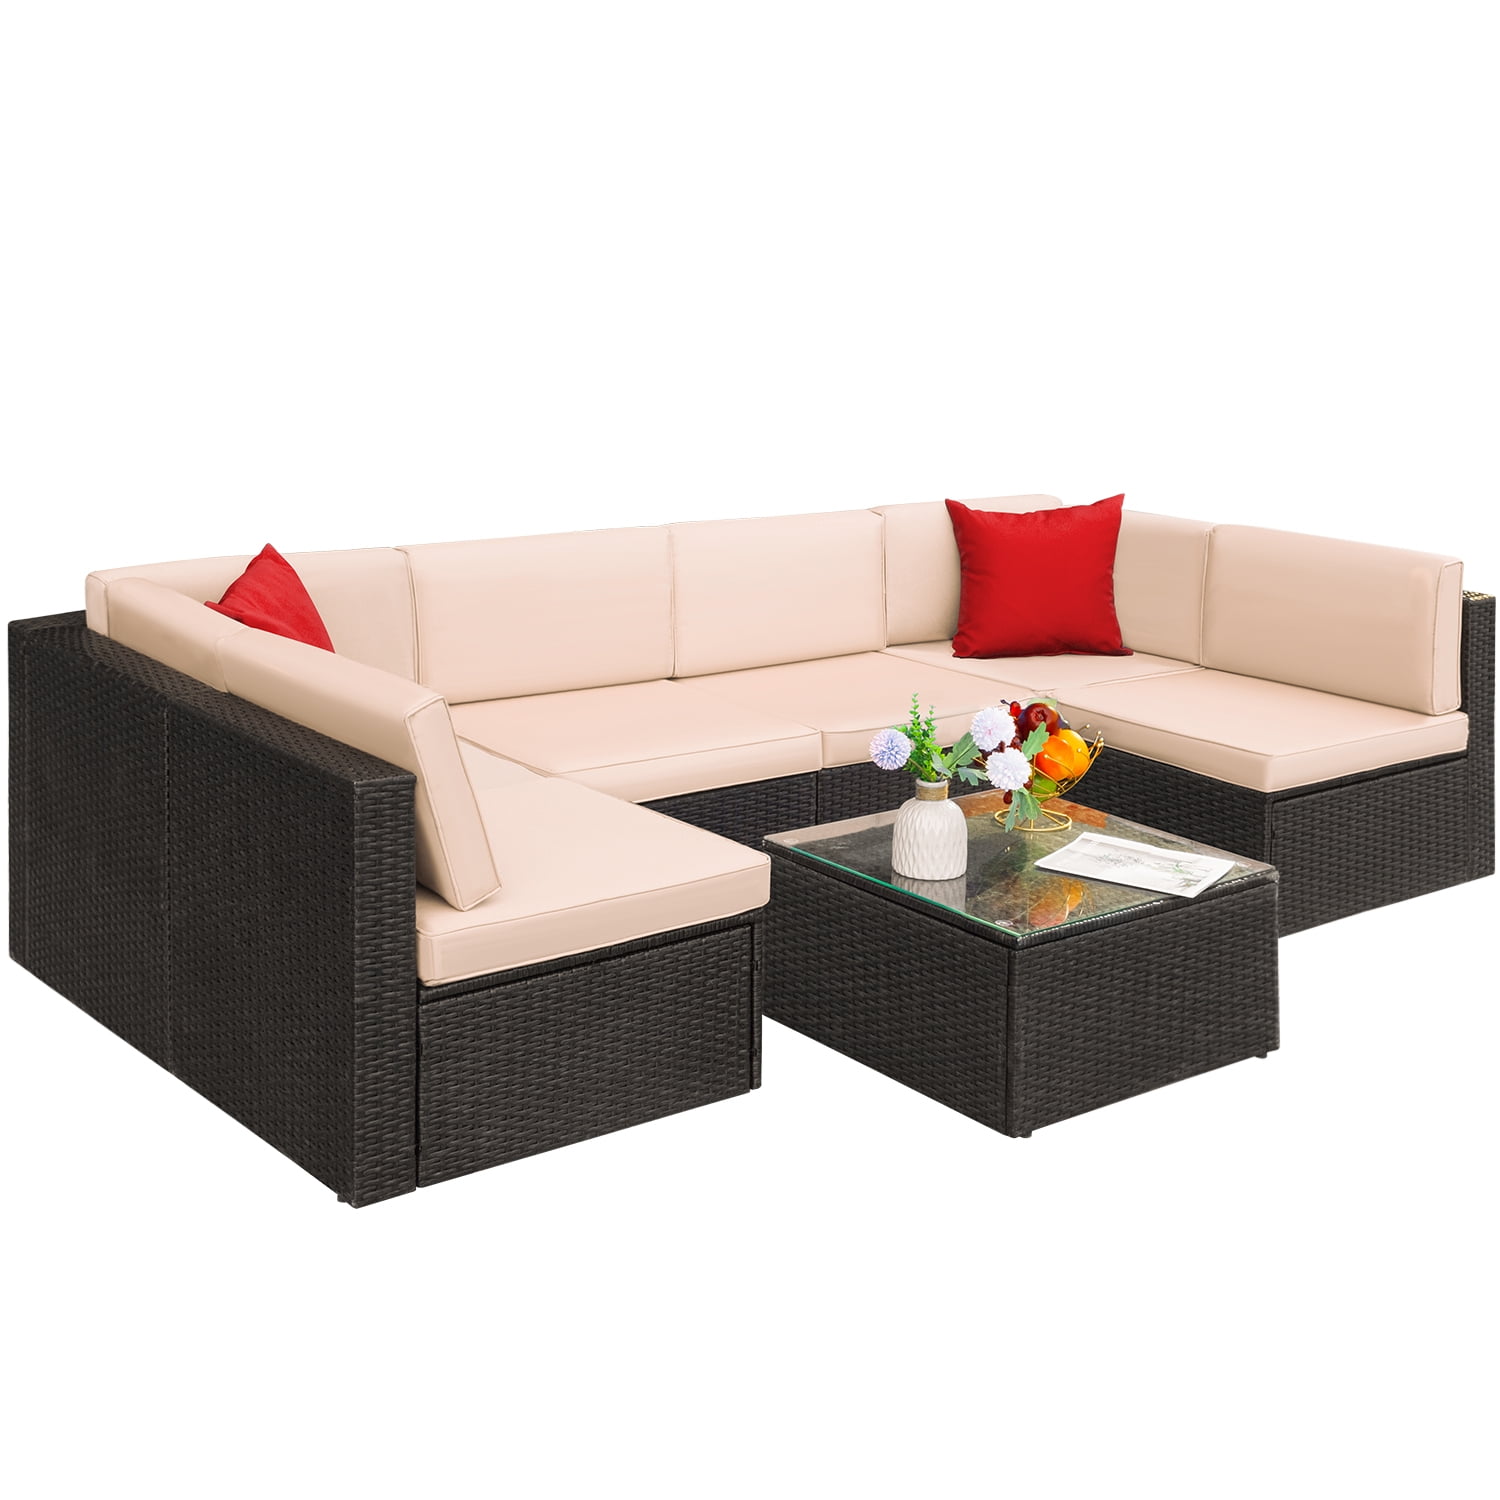 Brand New 7 Piece 3-7 Piece Patio PE Rattan Wicker Sofa Sectional Furniture Set 